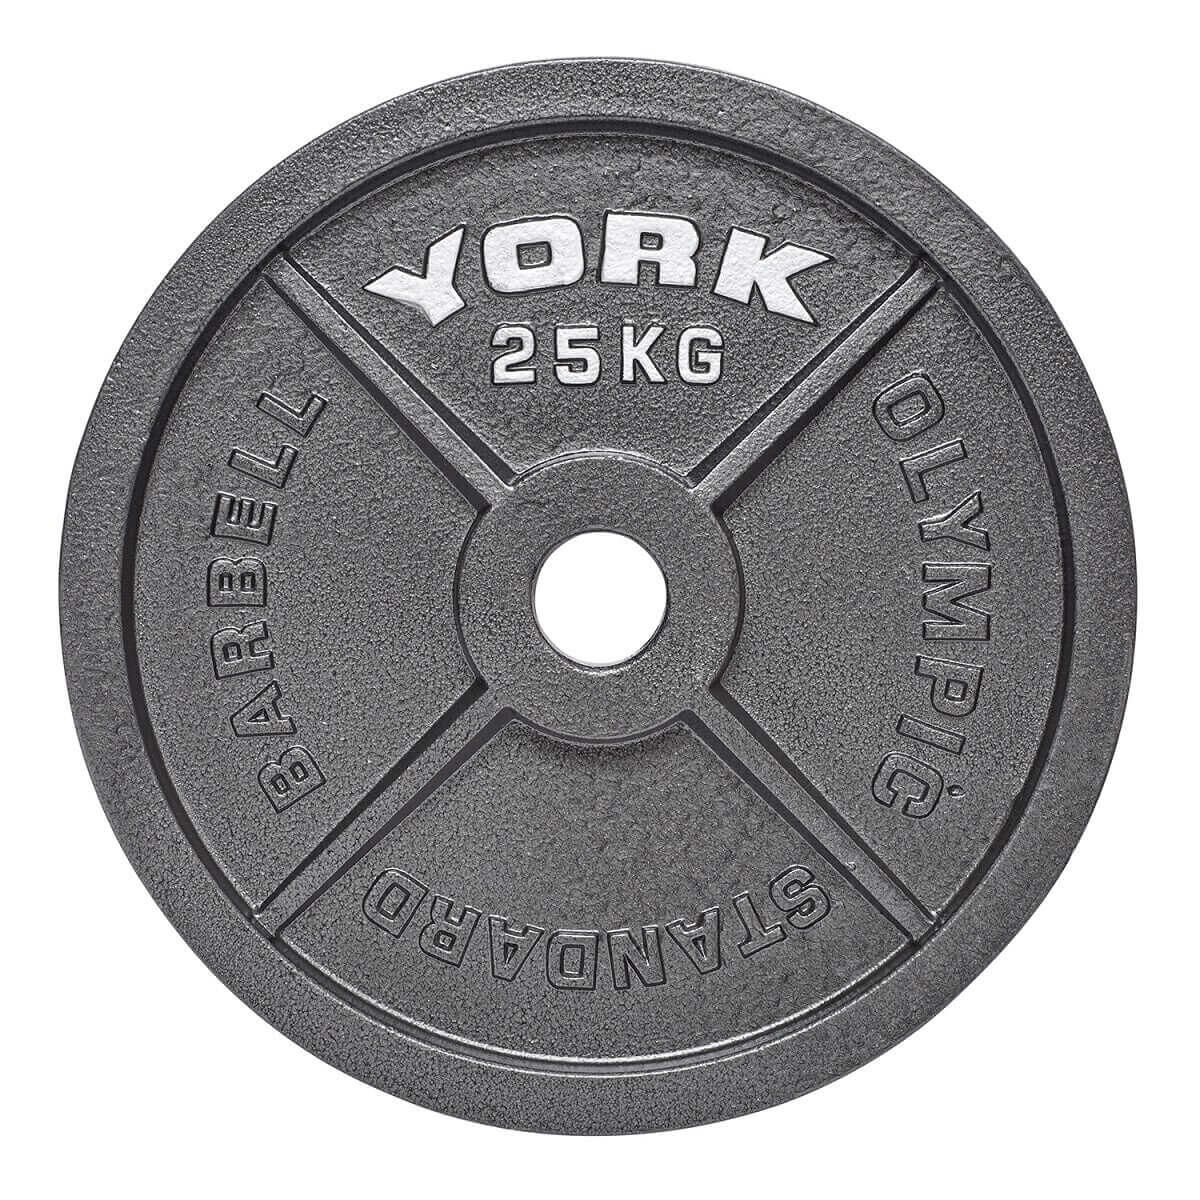 YORK York 1 x 25kg Olympic Hammertone Cast Iron Weight Plate